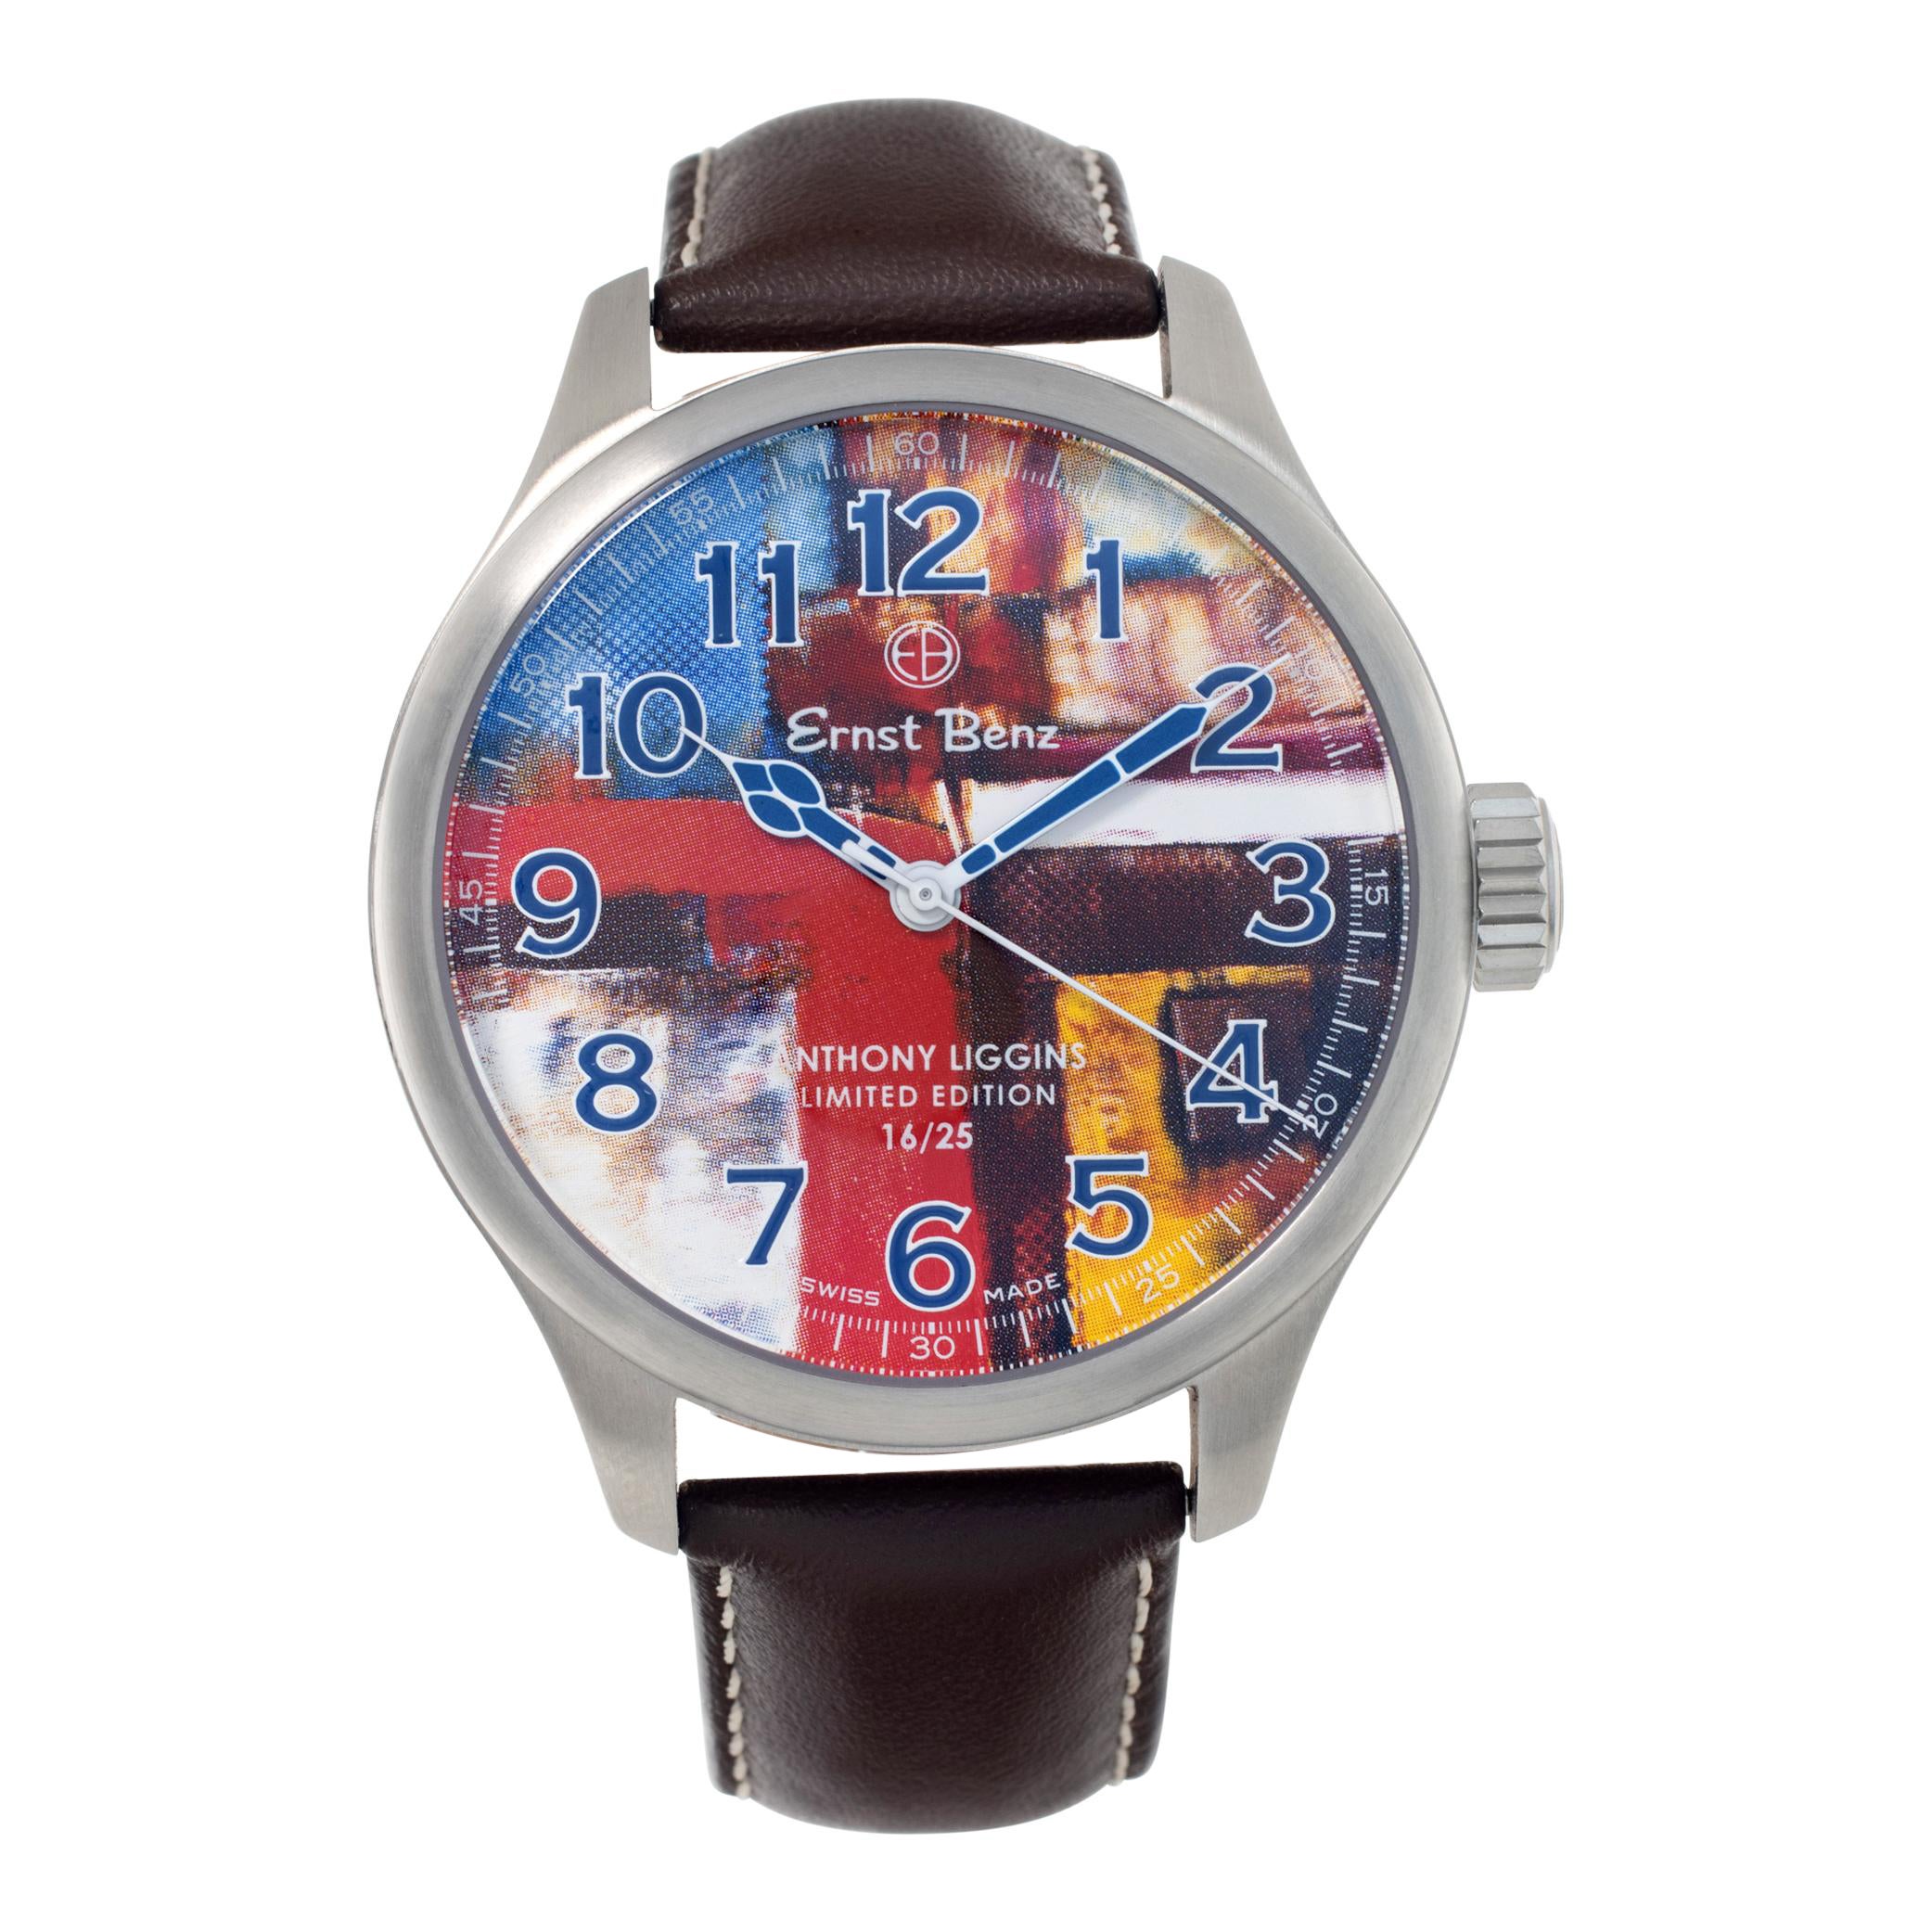 Unused Ernst Benz Chronosport stainlesssteel Automatic Wristwatch Ref GC10200-AL For Sale